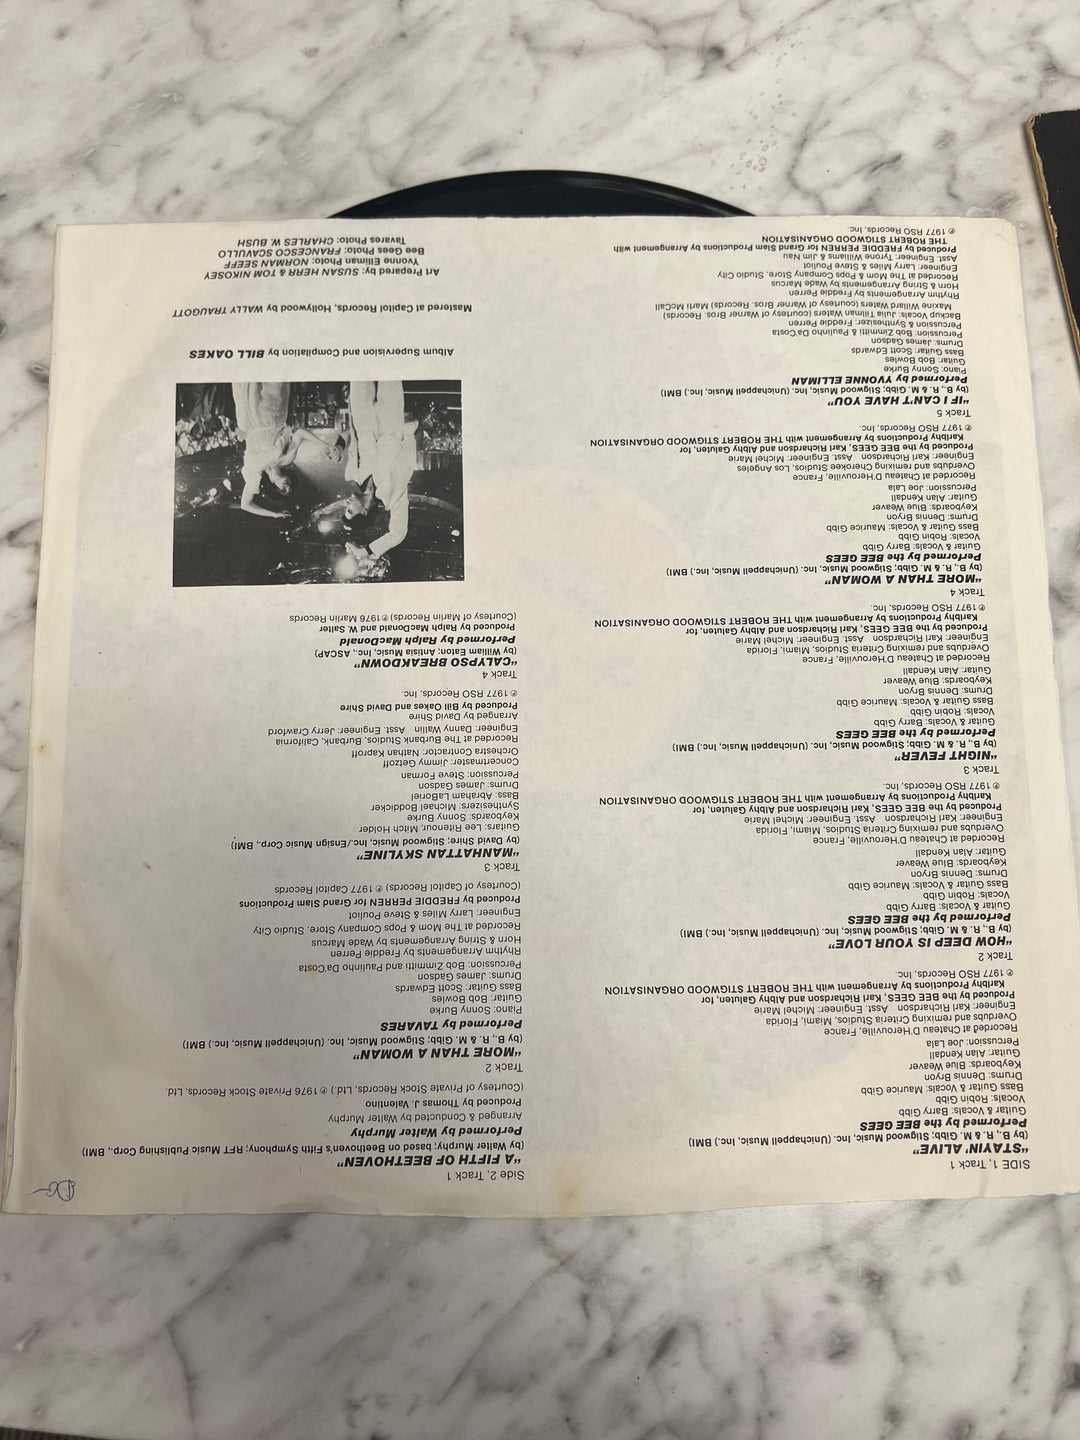 Saturday Night Fever Original Motion Picture Soundtrack Vinyl Record